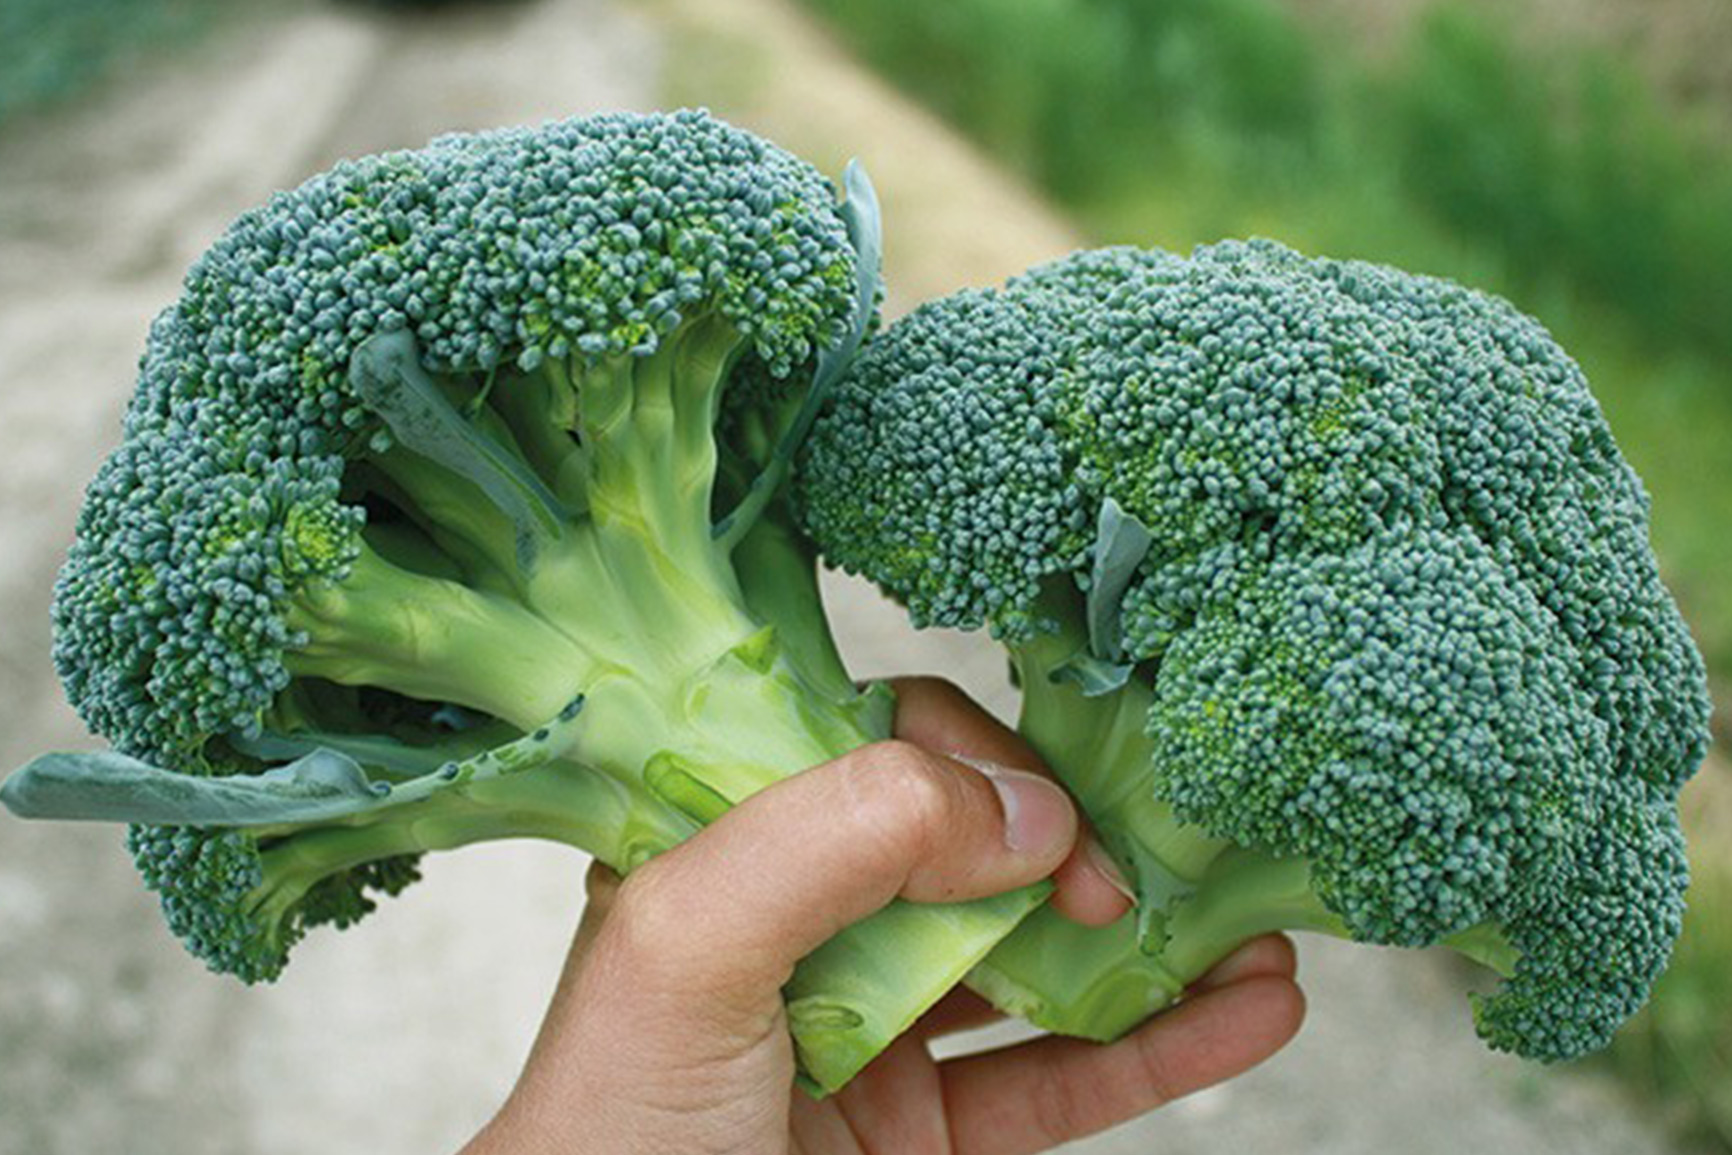 Broccoli - produce and Bruinsma Grower packer Bio organic of